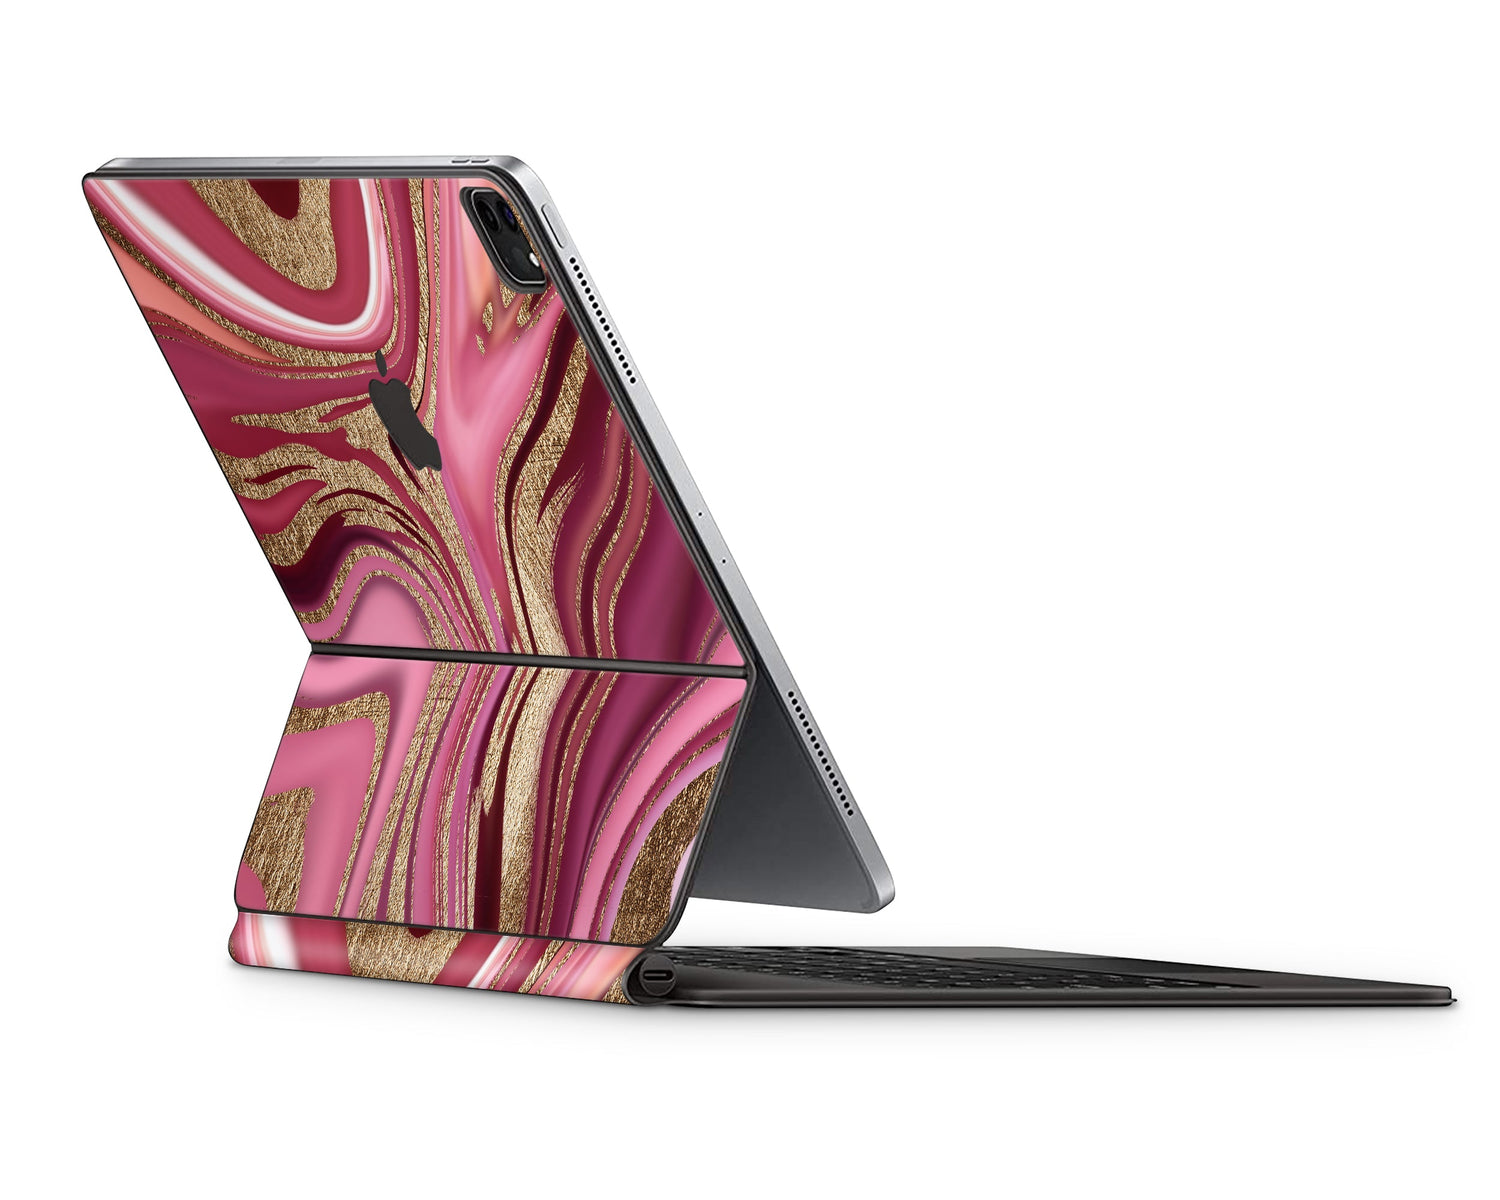 Lux Skins Magic Keyboard Ethereal Pink Gold Marble iPad Pro 12.9" Skins - Pattern Marble Skin